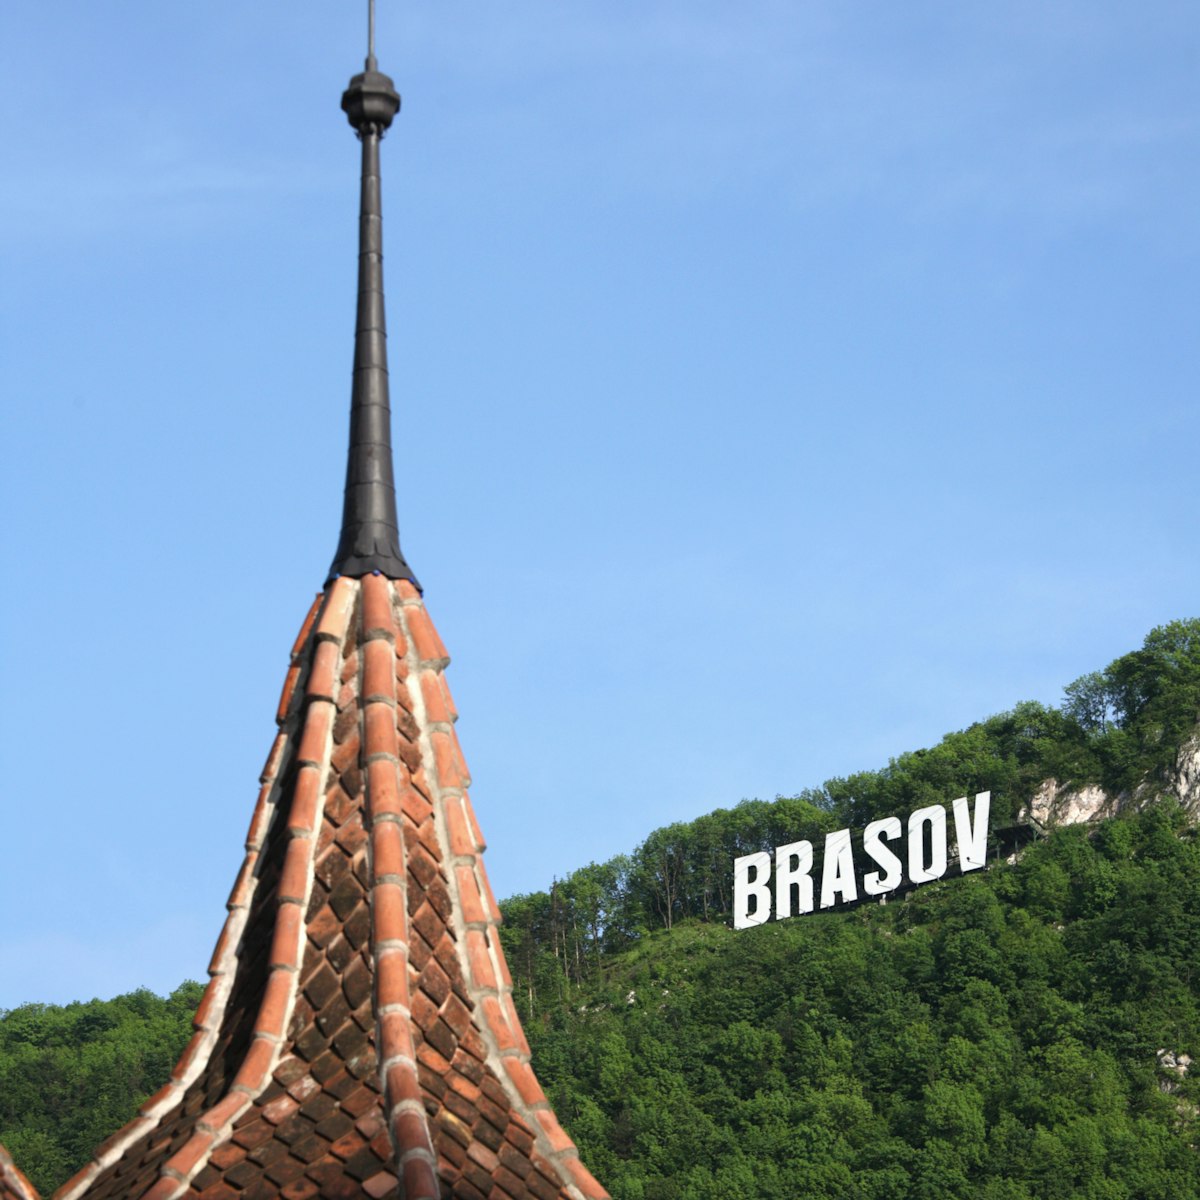 Hollywood like Brasov sign on Tampa mountain, Brasov, Romania